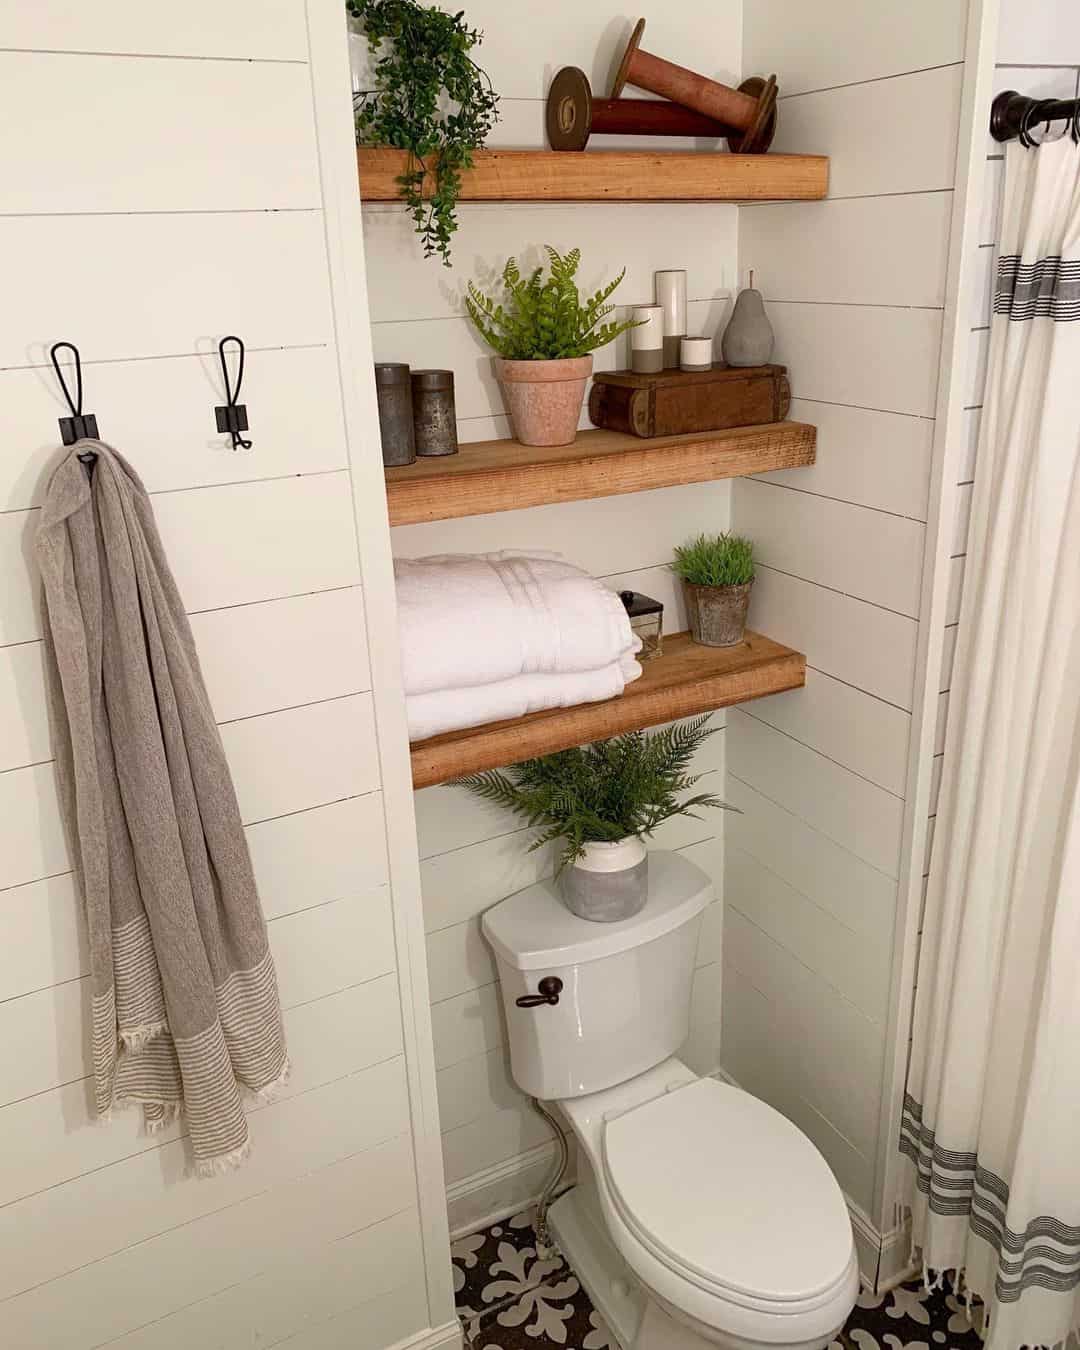 Wood Bathroom Shelves Installed on Recessed Wall - Soul & Lane